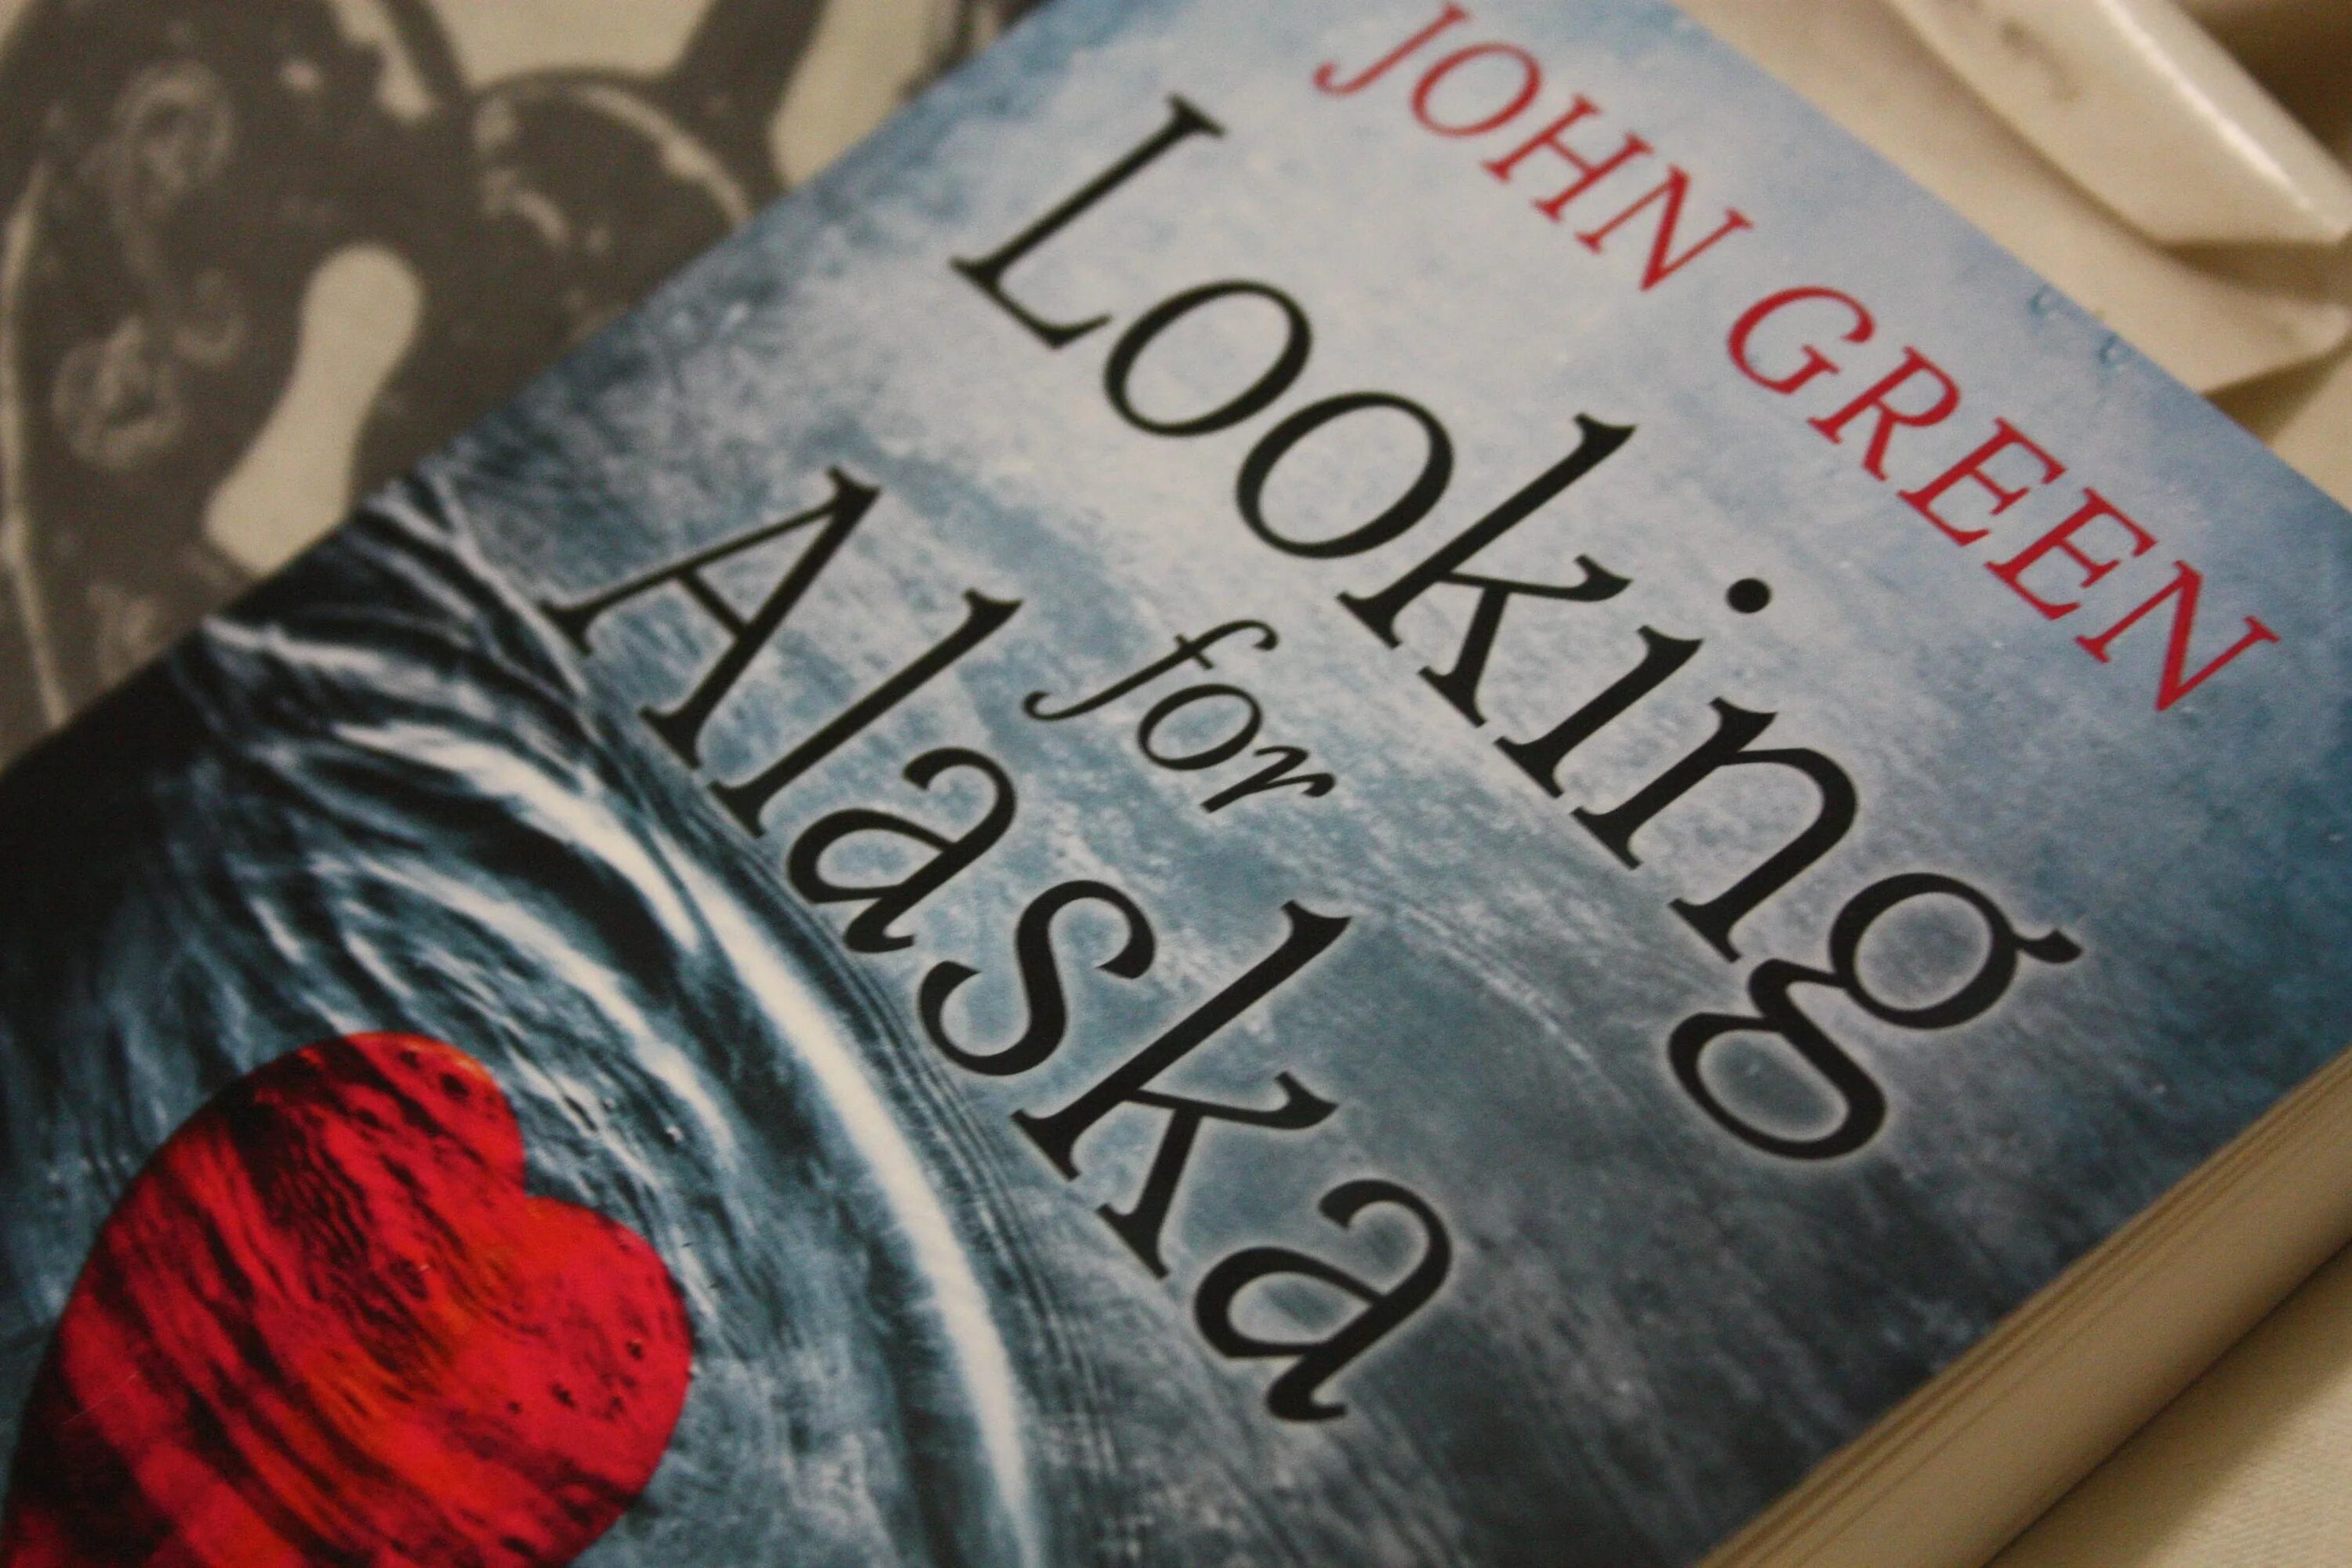 Джон грин аляски. Looking for Alaska книга. John Green looking for Alaska. John Green looking for Alaska book. Джон Грин (писатель).